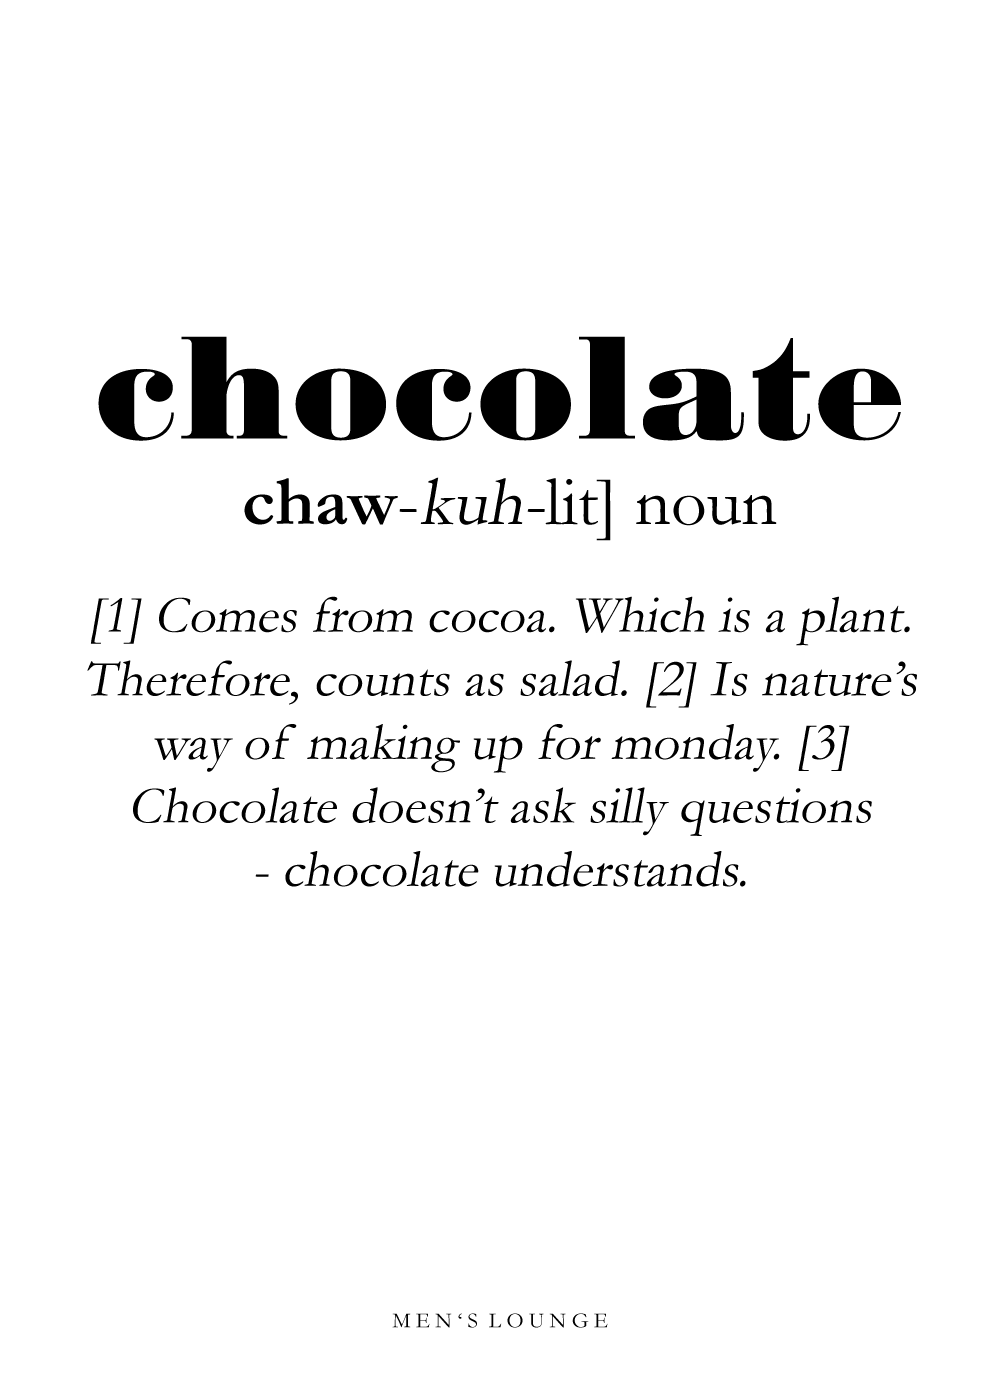 Chocolate definition - Men's Lounge plakat